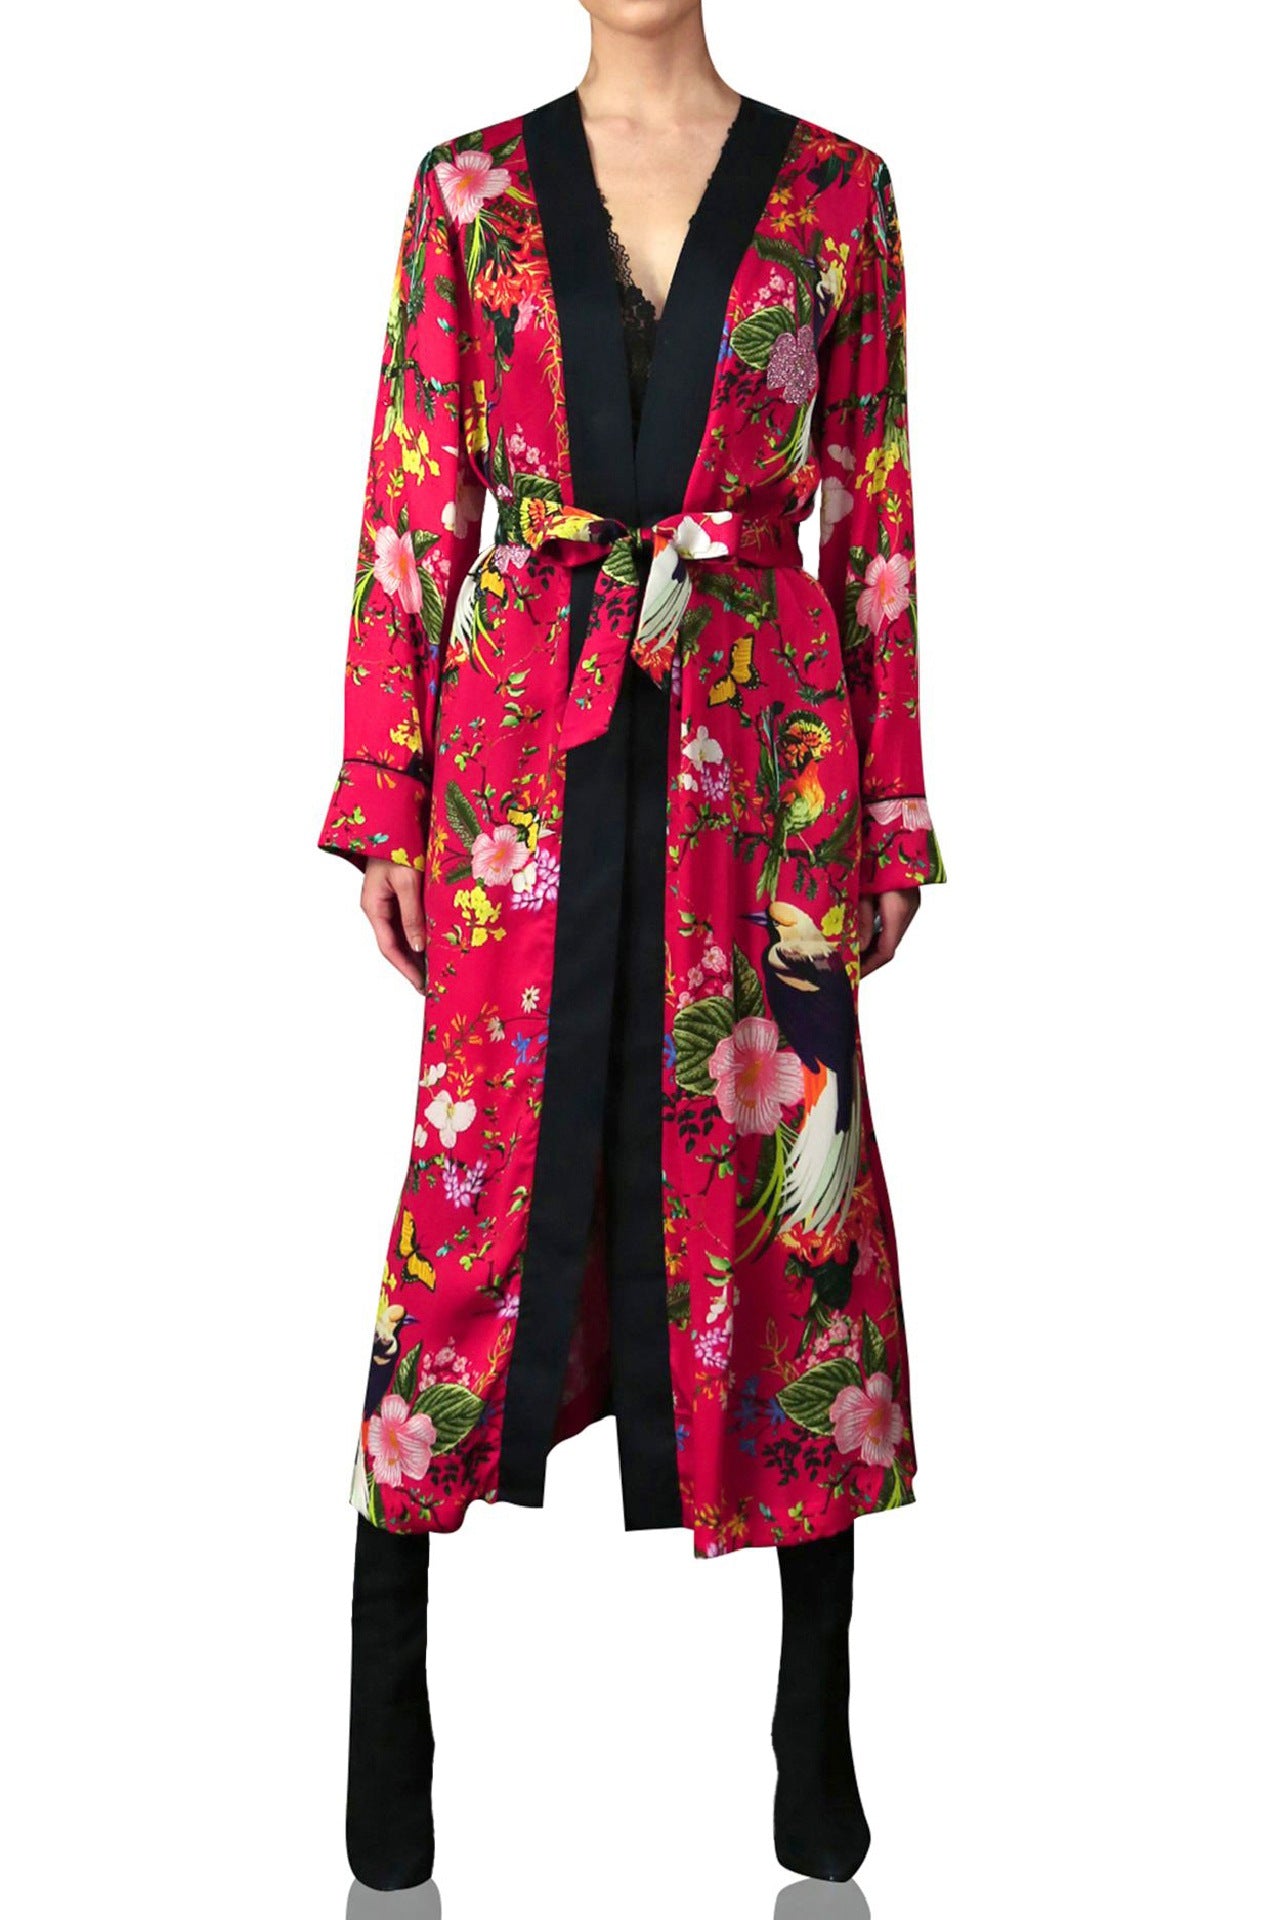 Designer-Robes-For-Women-By-Kyle-Richards